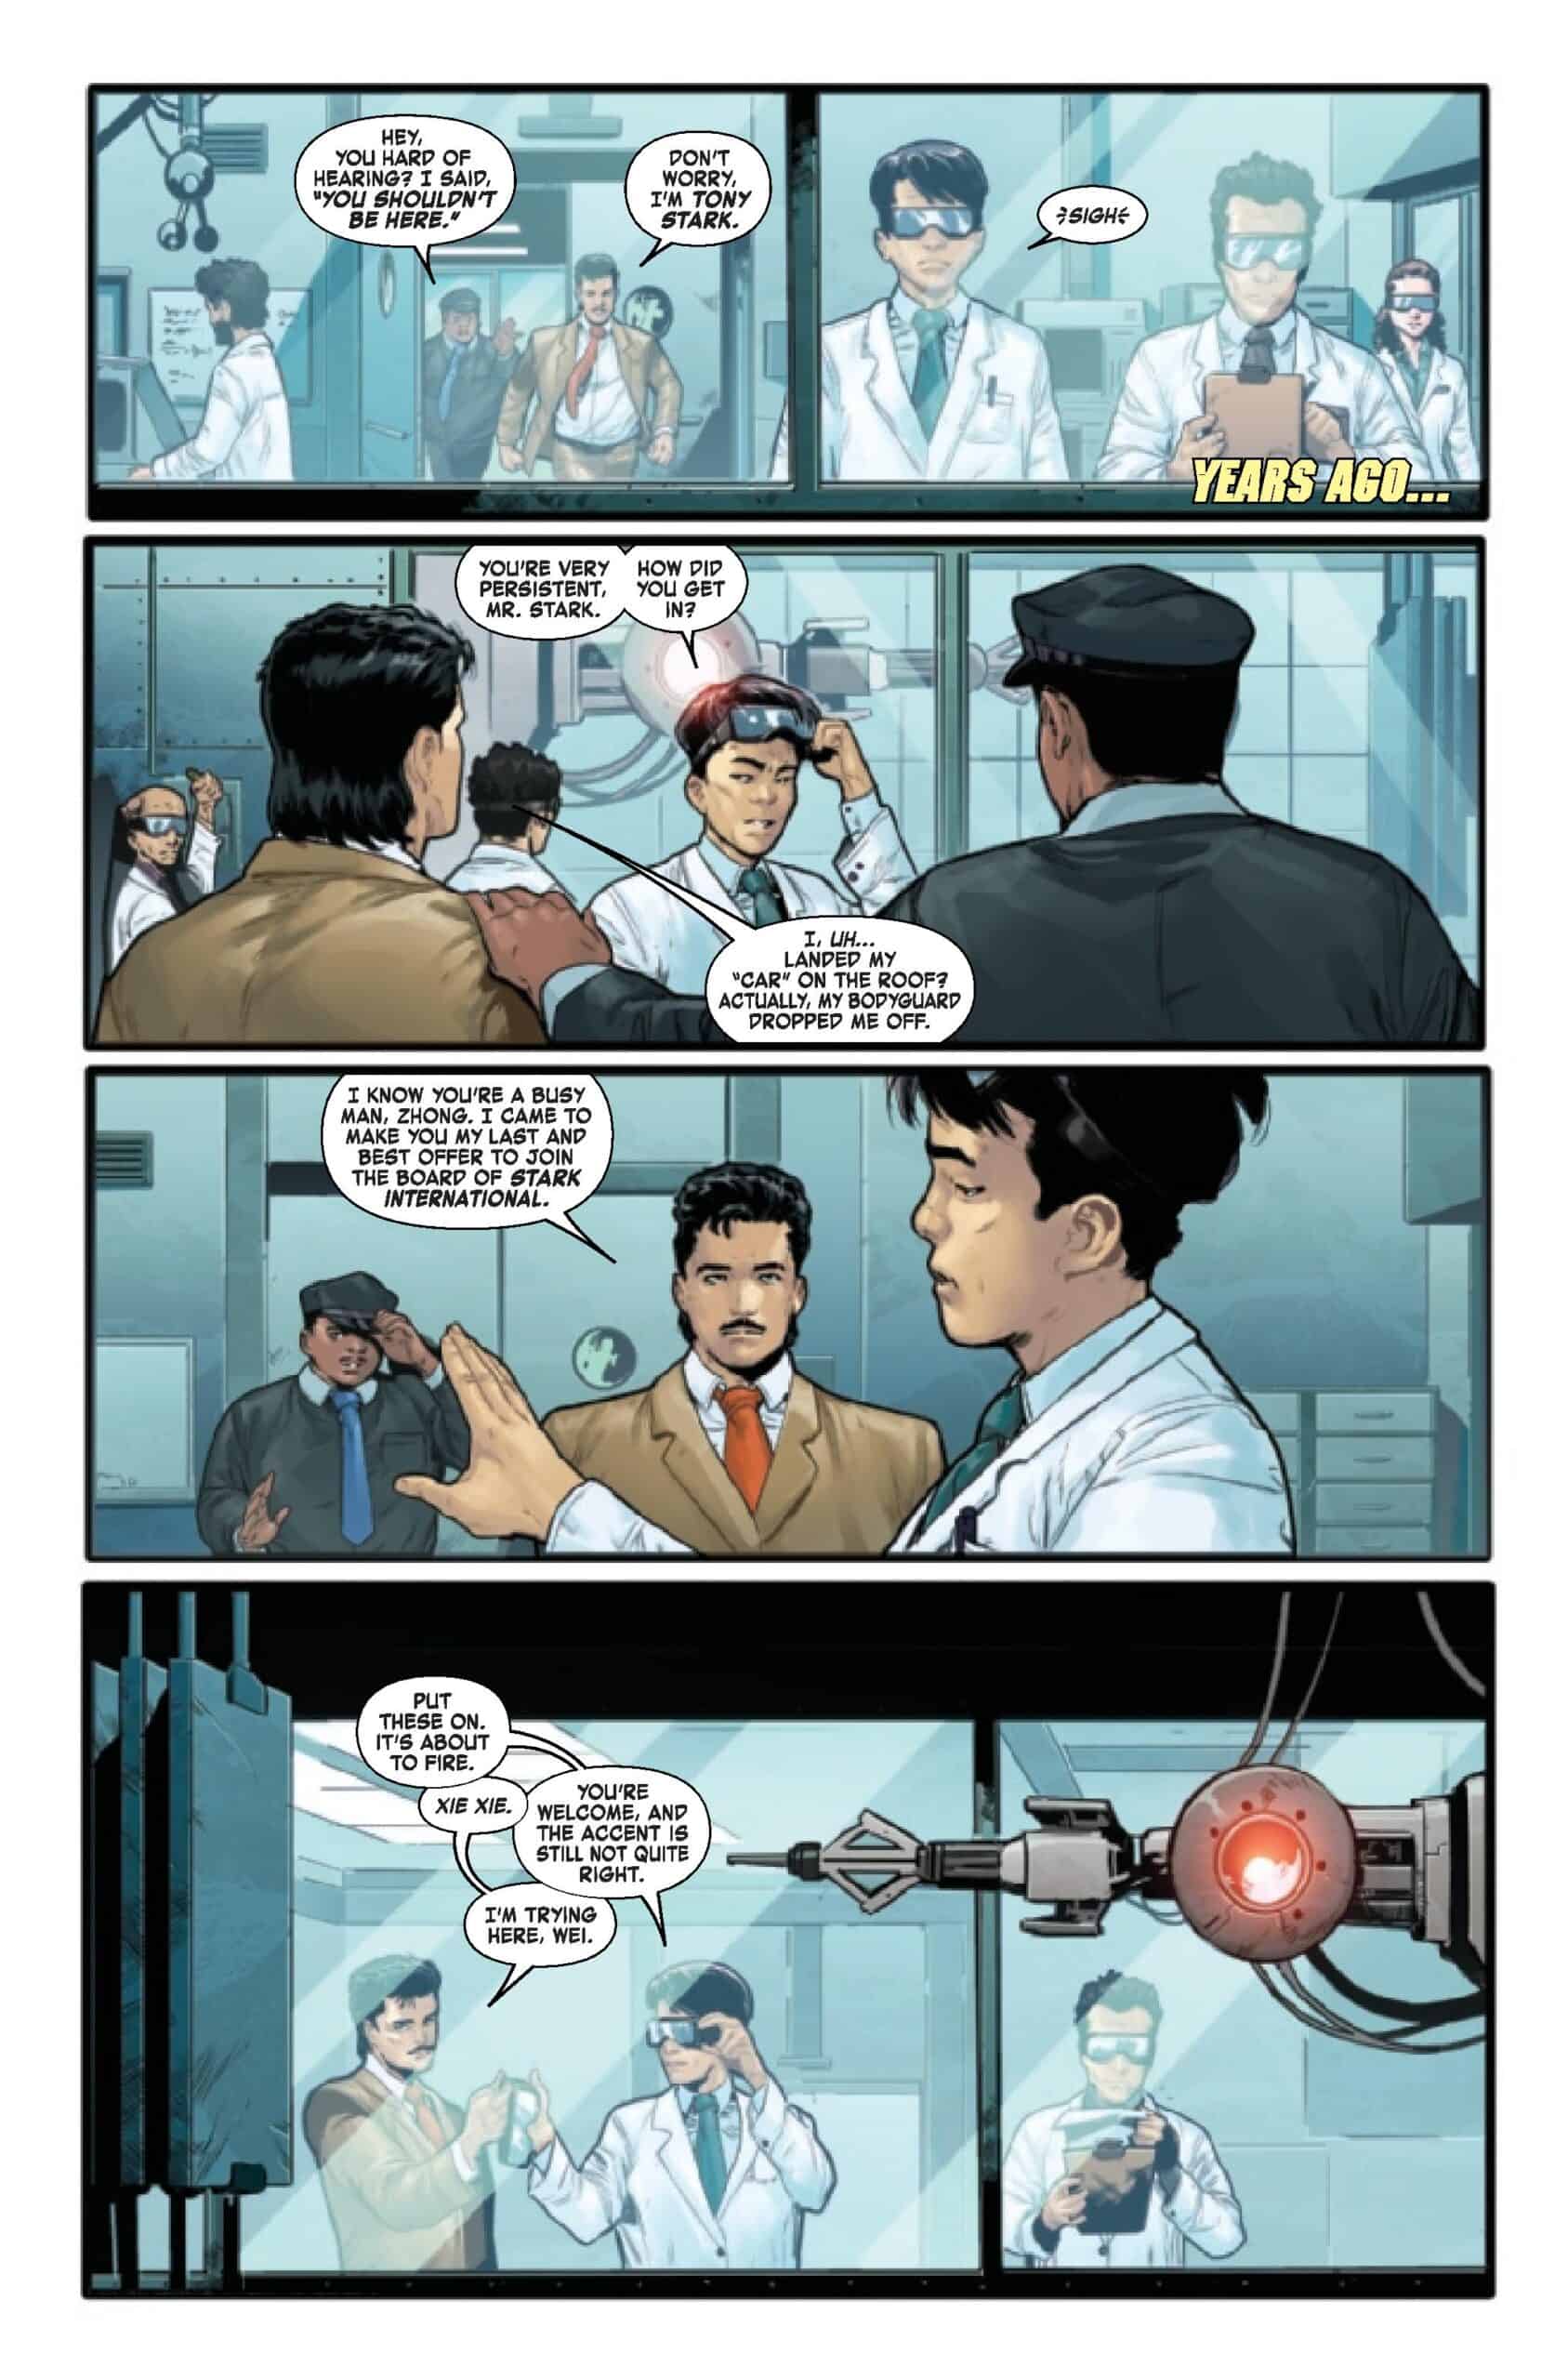 INVINCIBLE IRON MAN #3 Preview: Tony Stark Breaks Bad - Comic Watch